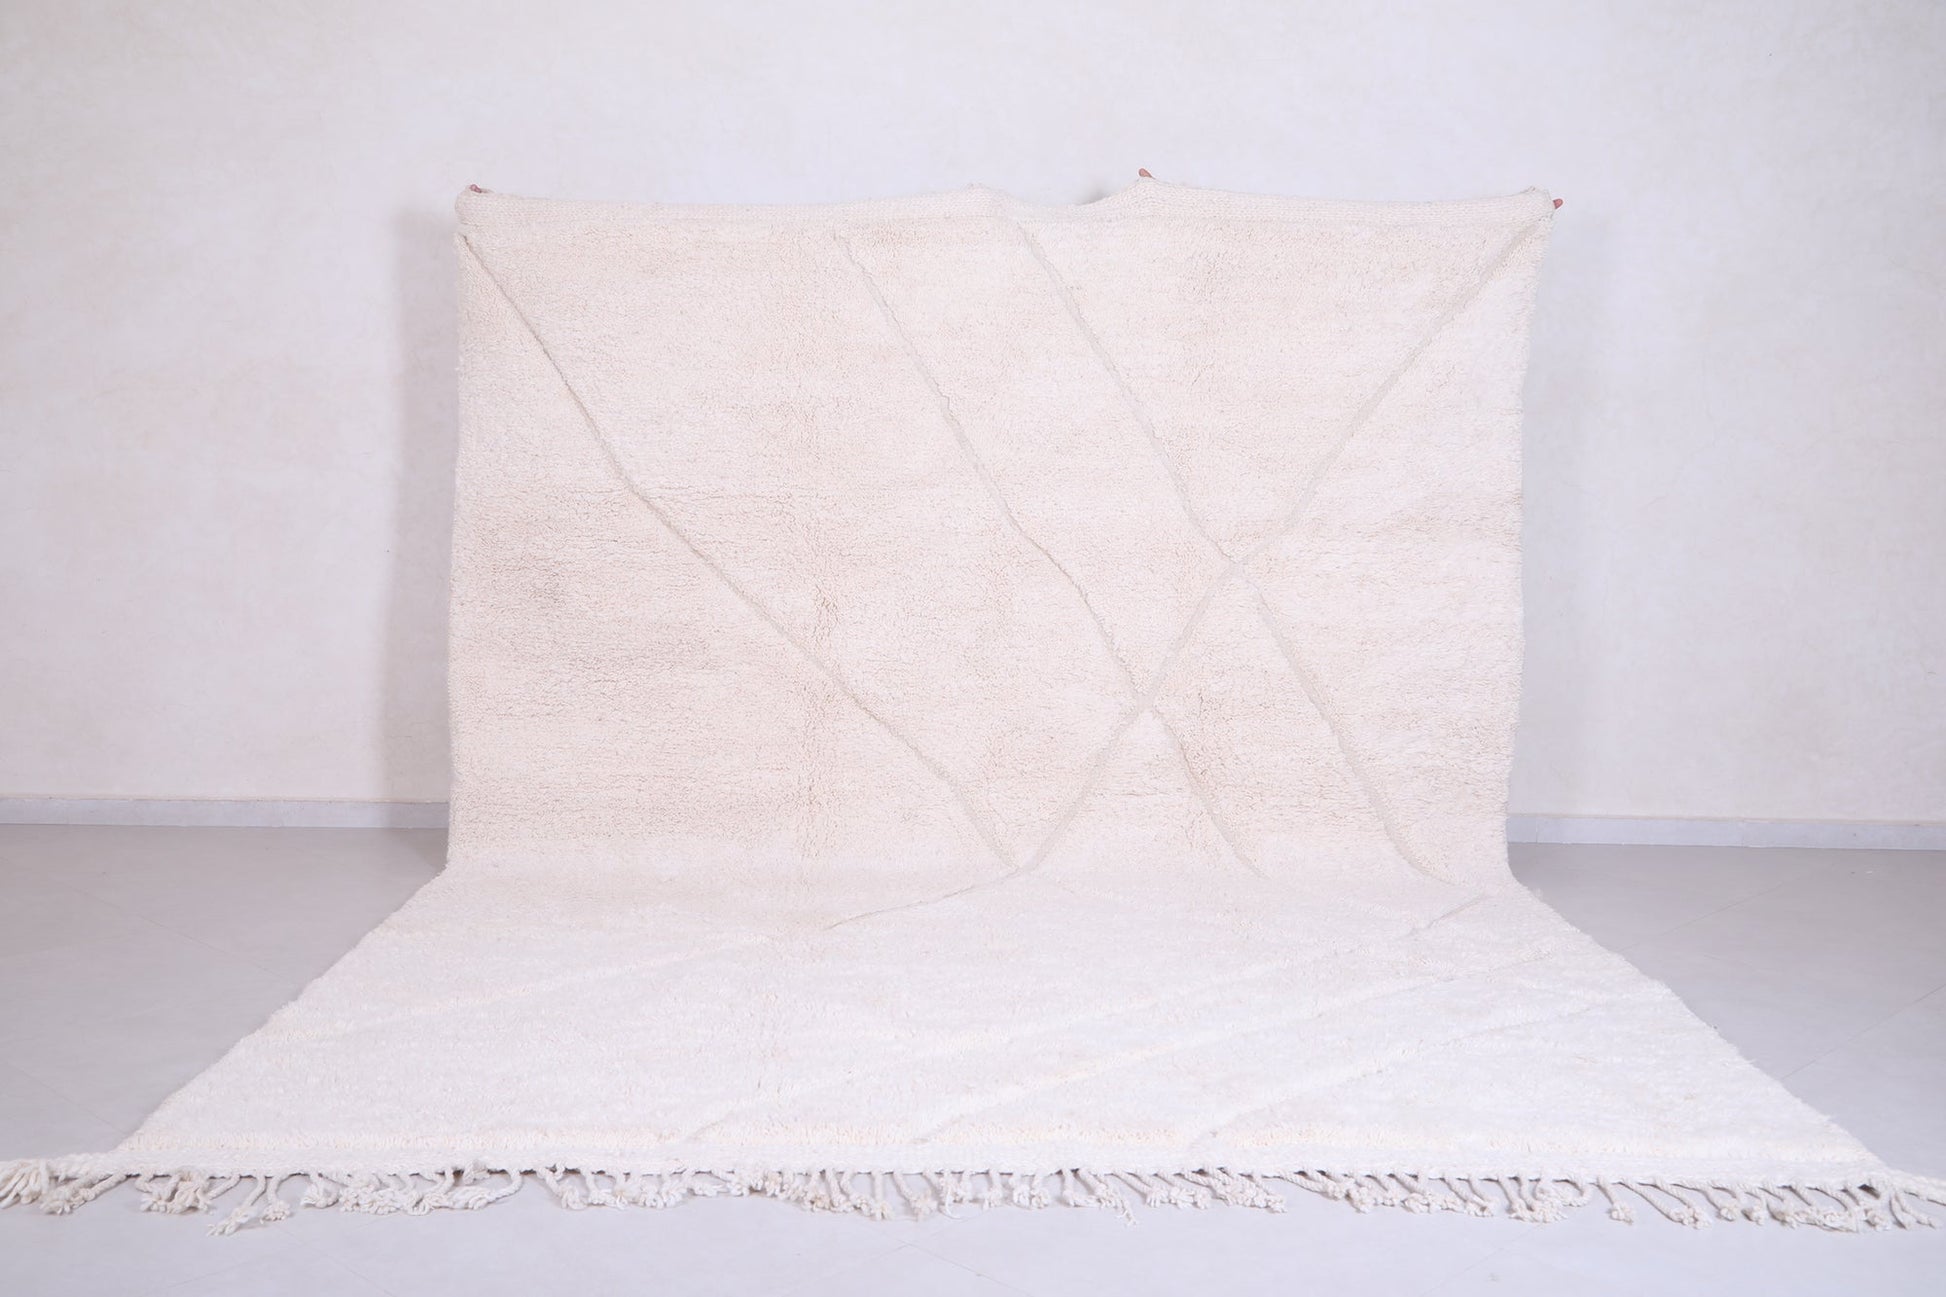 Custom beni ourain rug, Handmade Moroccan white carpet